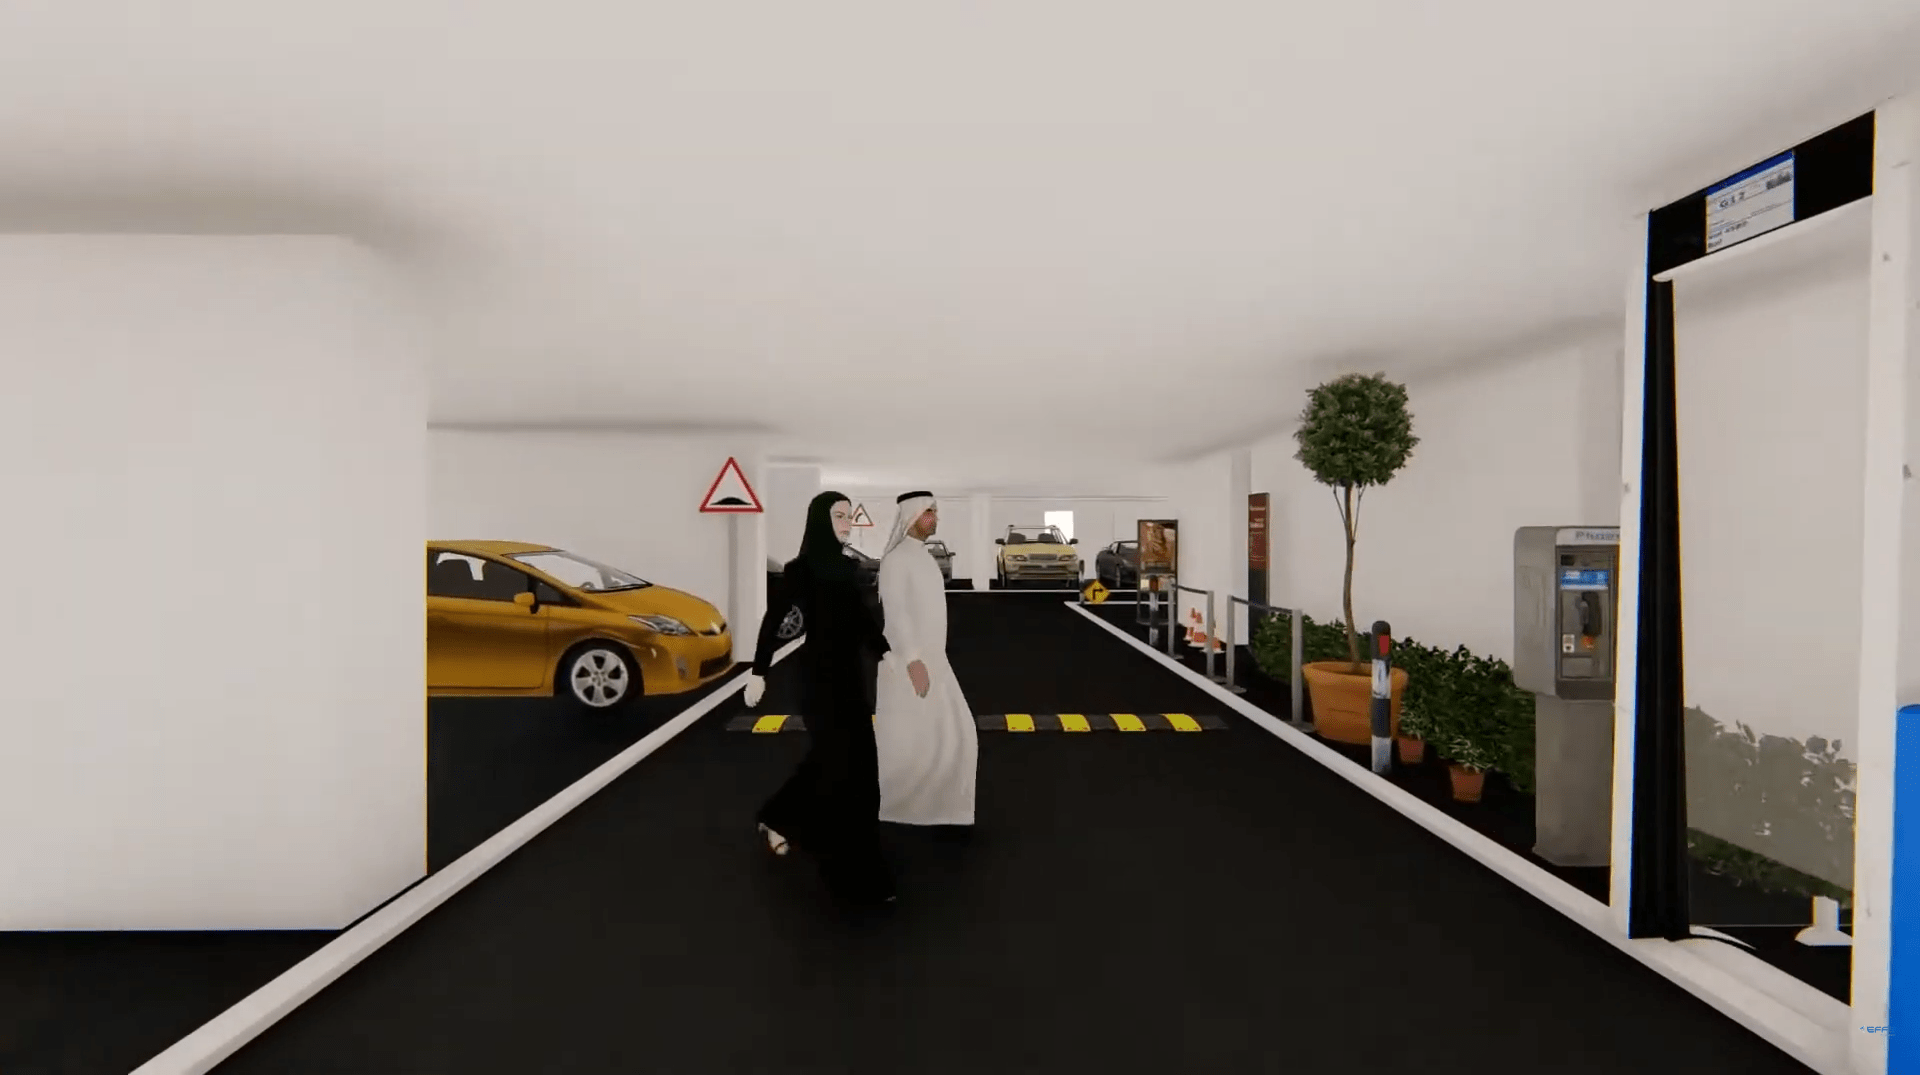 3d walkthrough animation